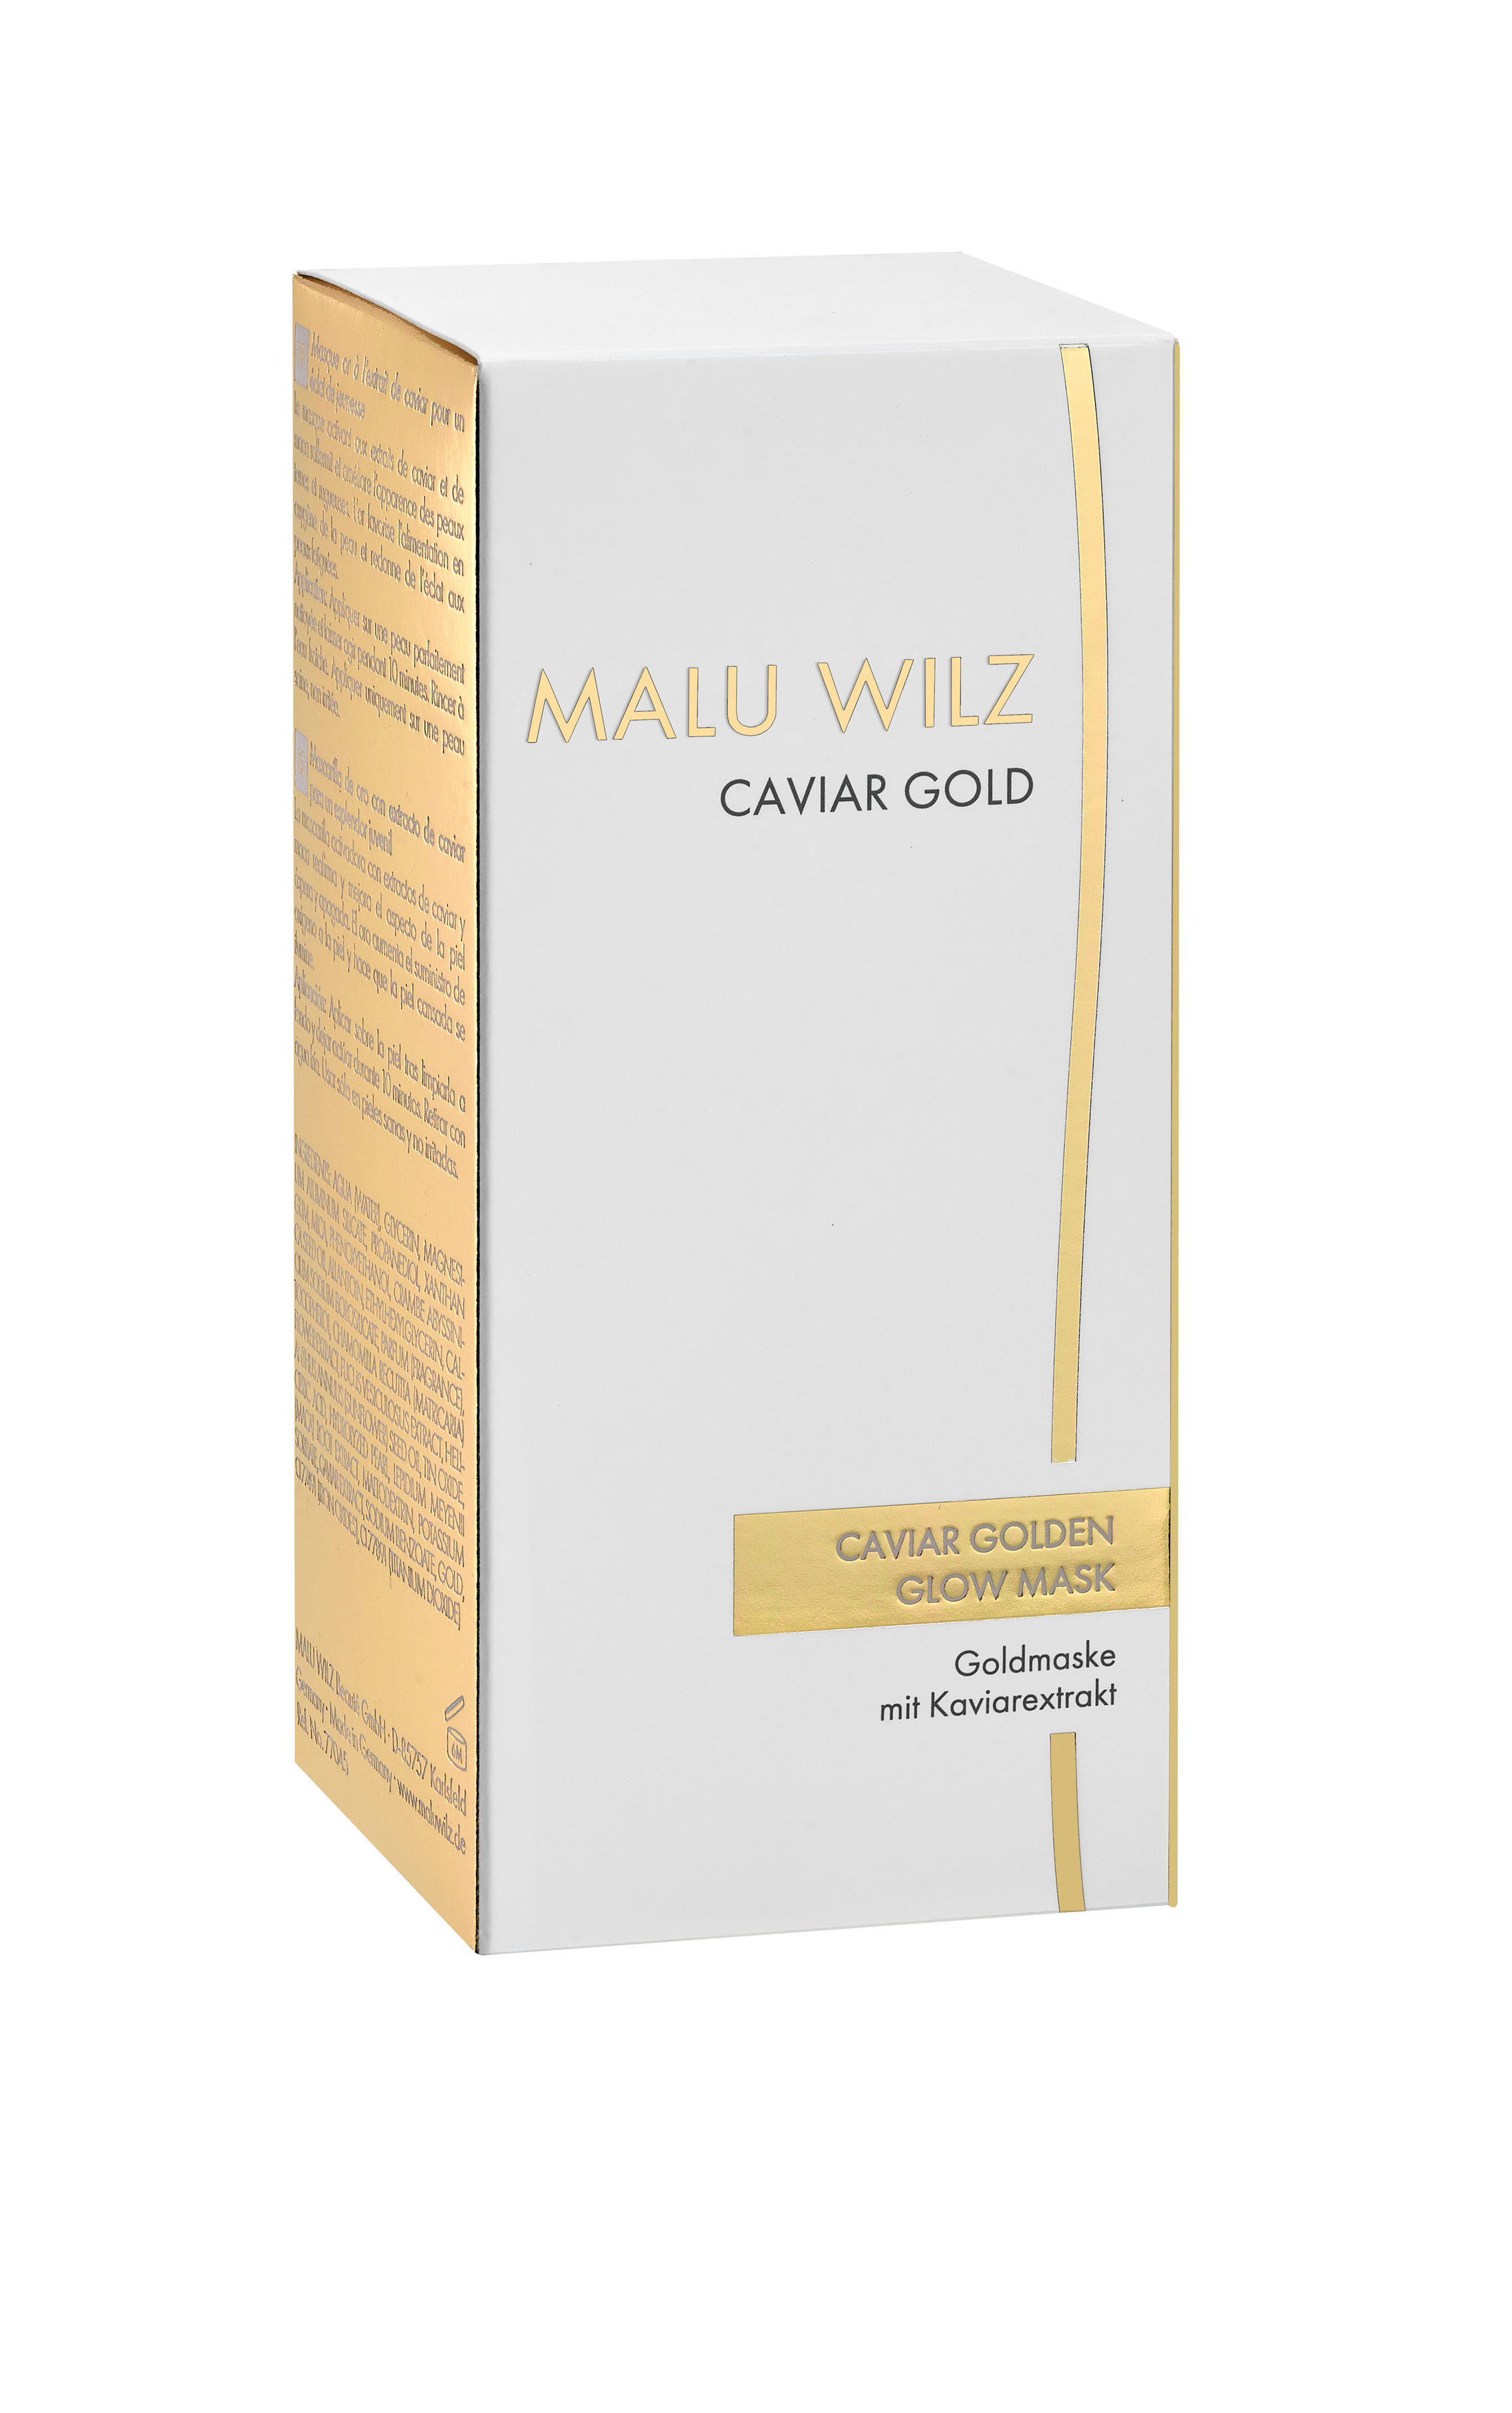 Caviar golden glow mask